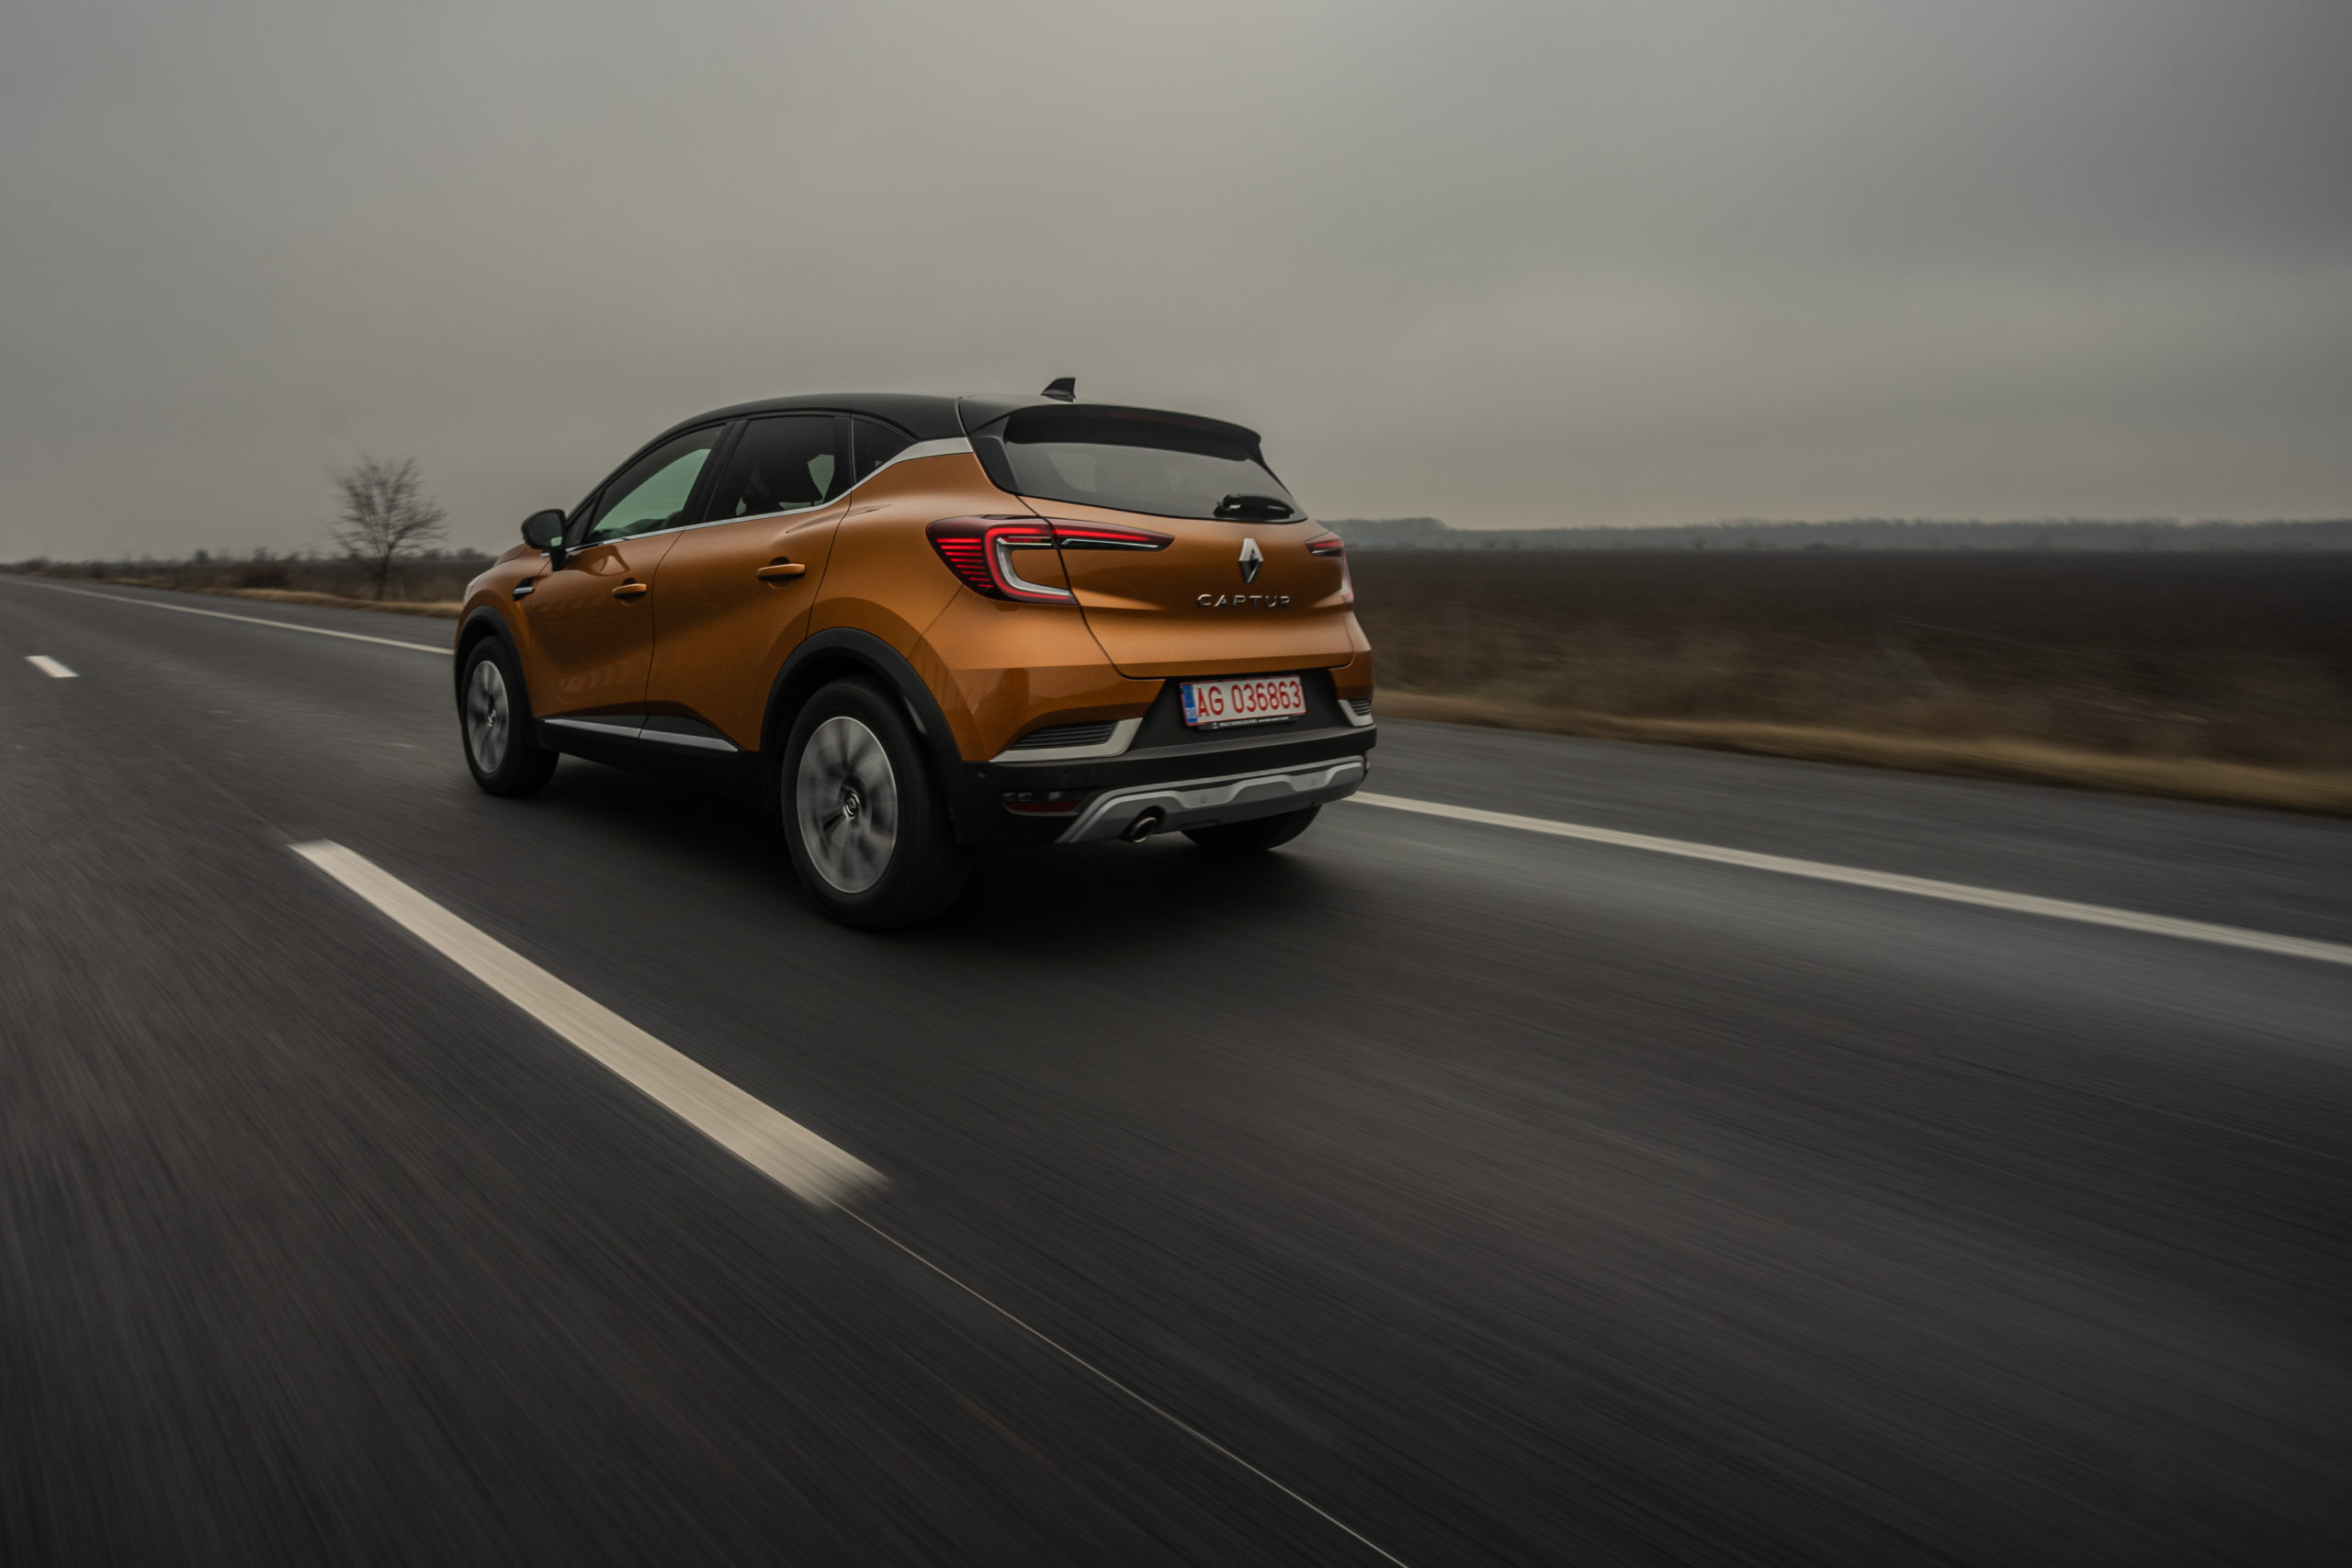 FOTO: Renault Captur 13.02.2020